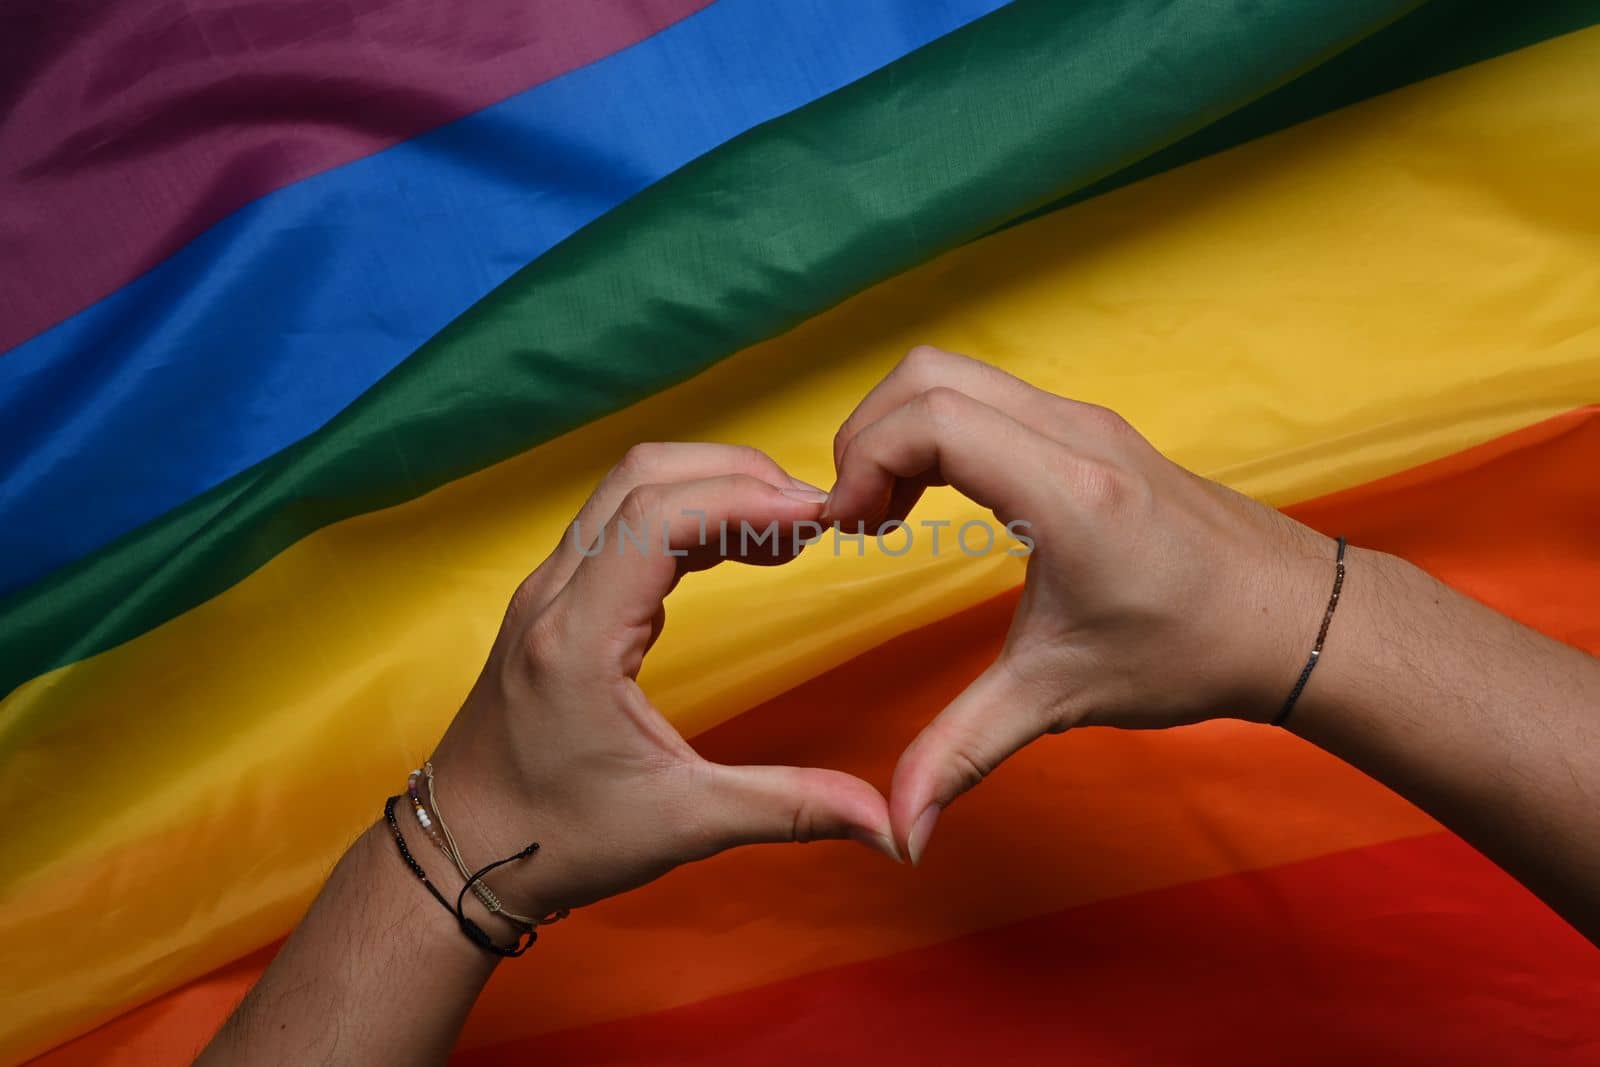 Hand making a heart sign over LGBT rainbow flag.